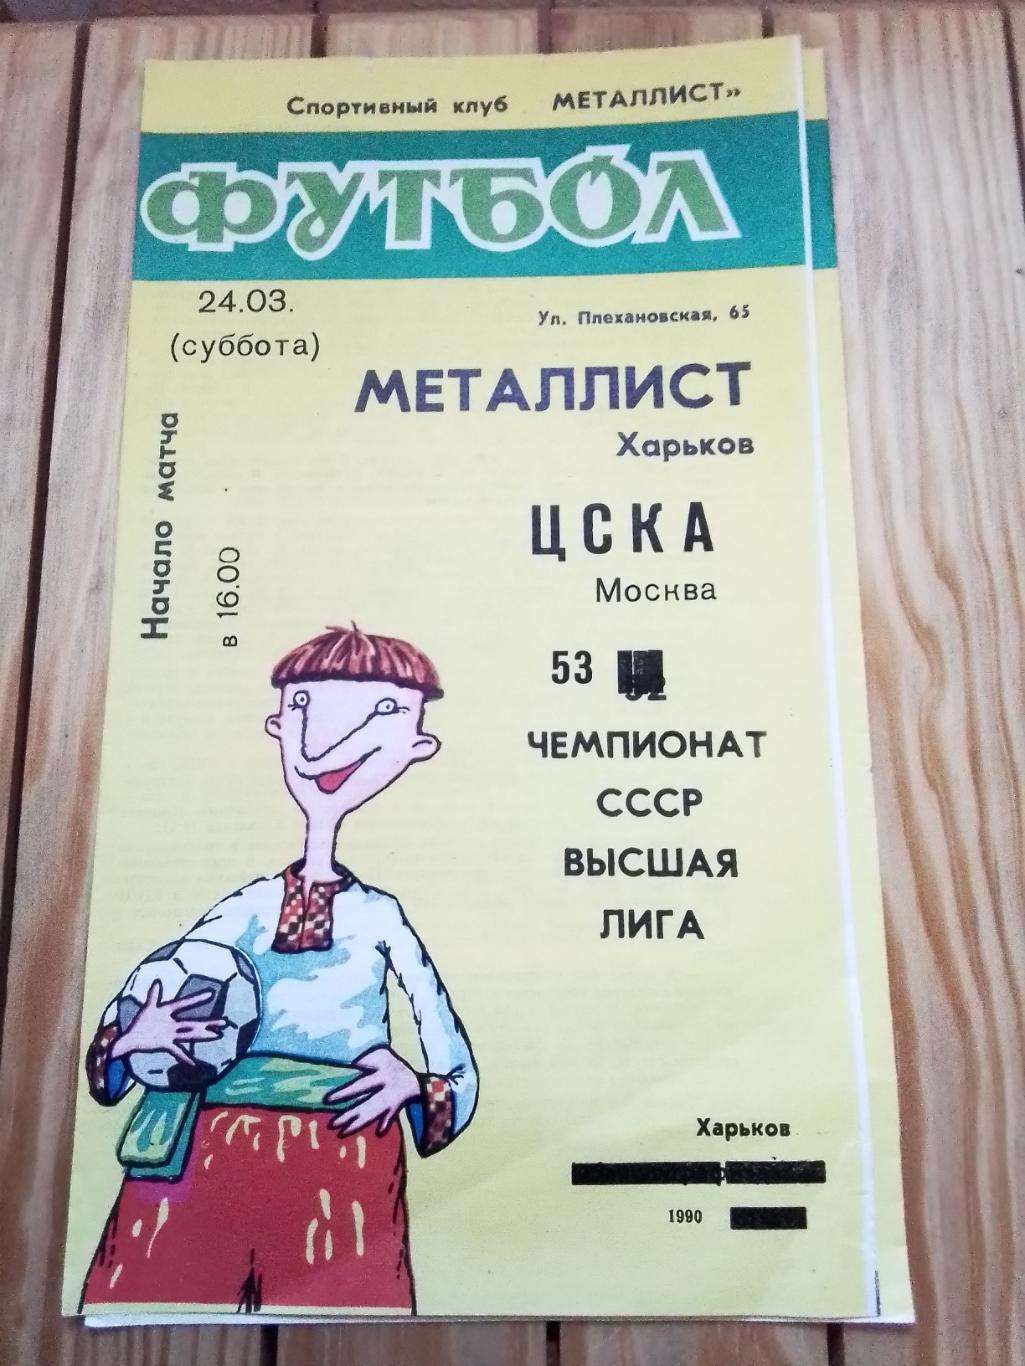 Металлист Харьков - ЦСКА Москва 1990